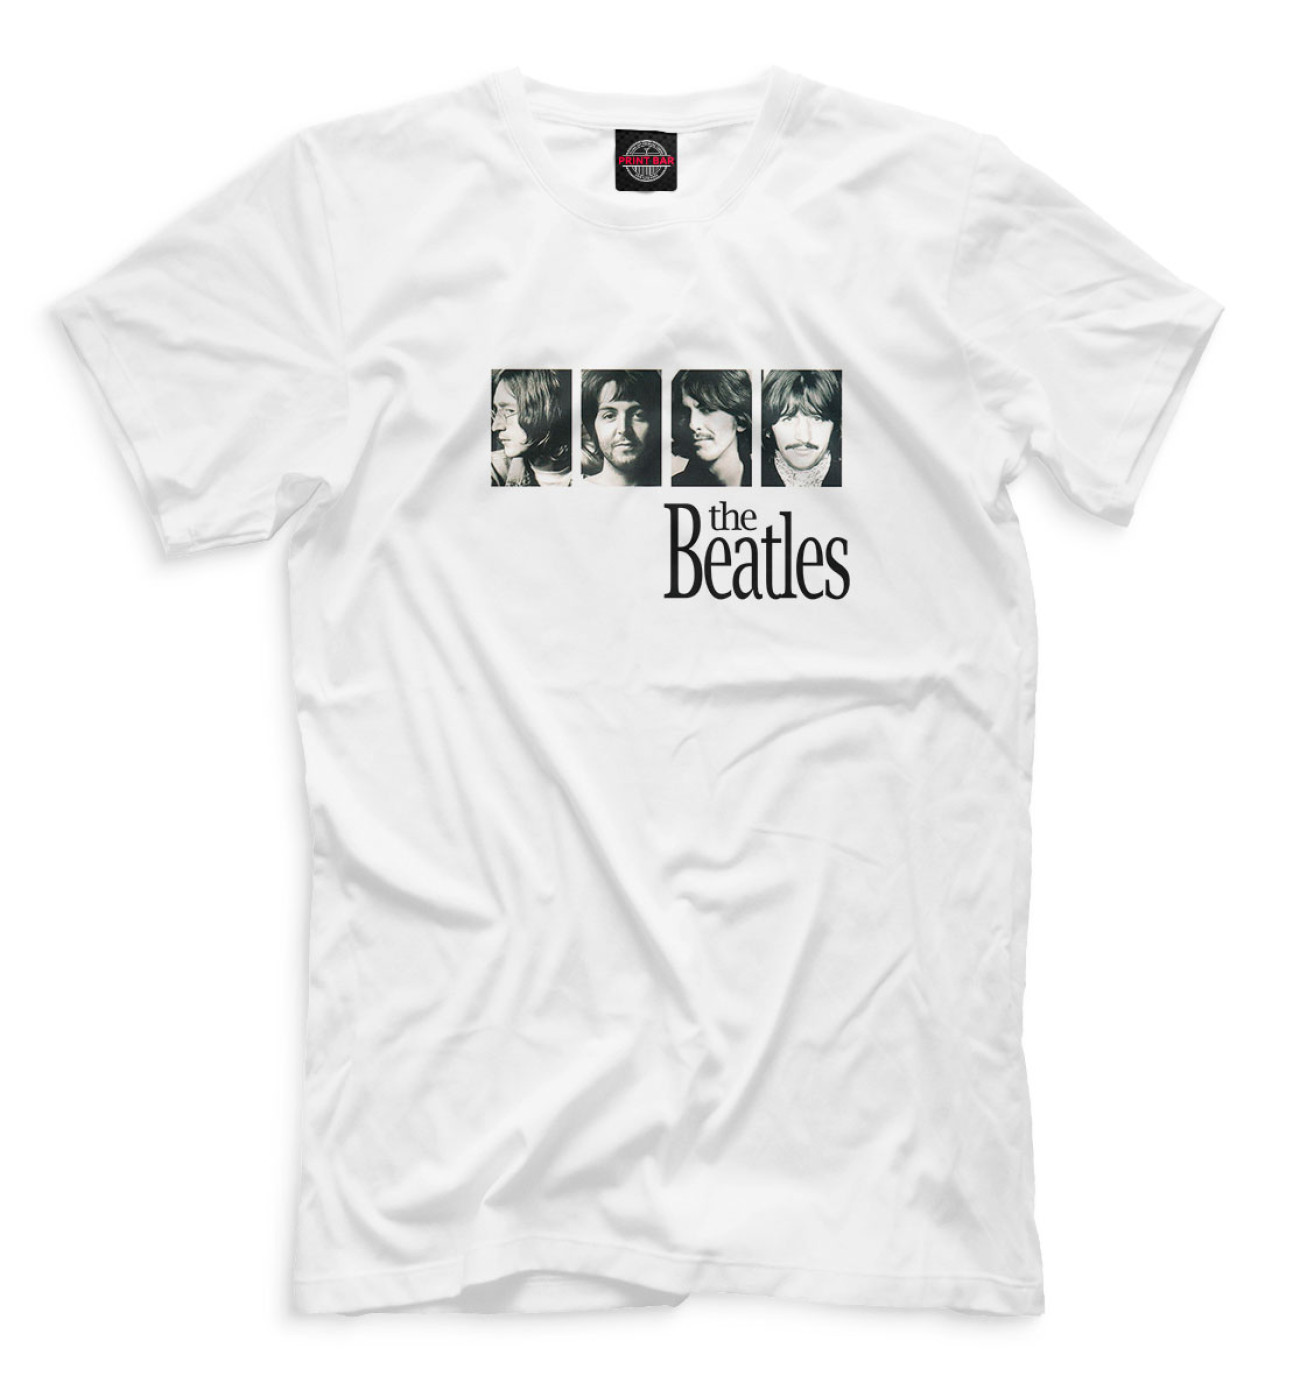 Мужская Футболка The Beatles -The Beatles, артикул: BTS-891601-fut-2